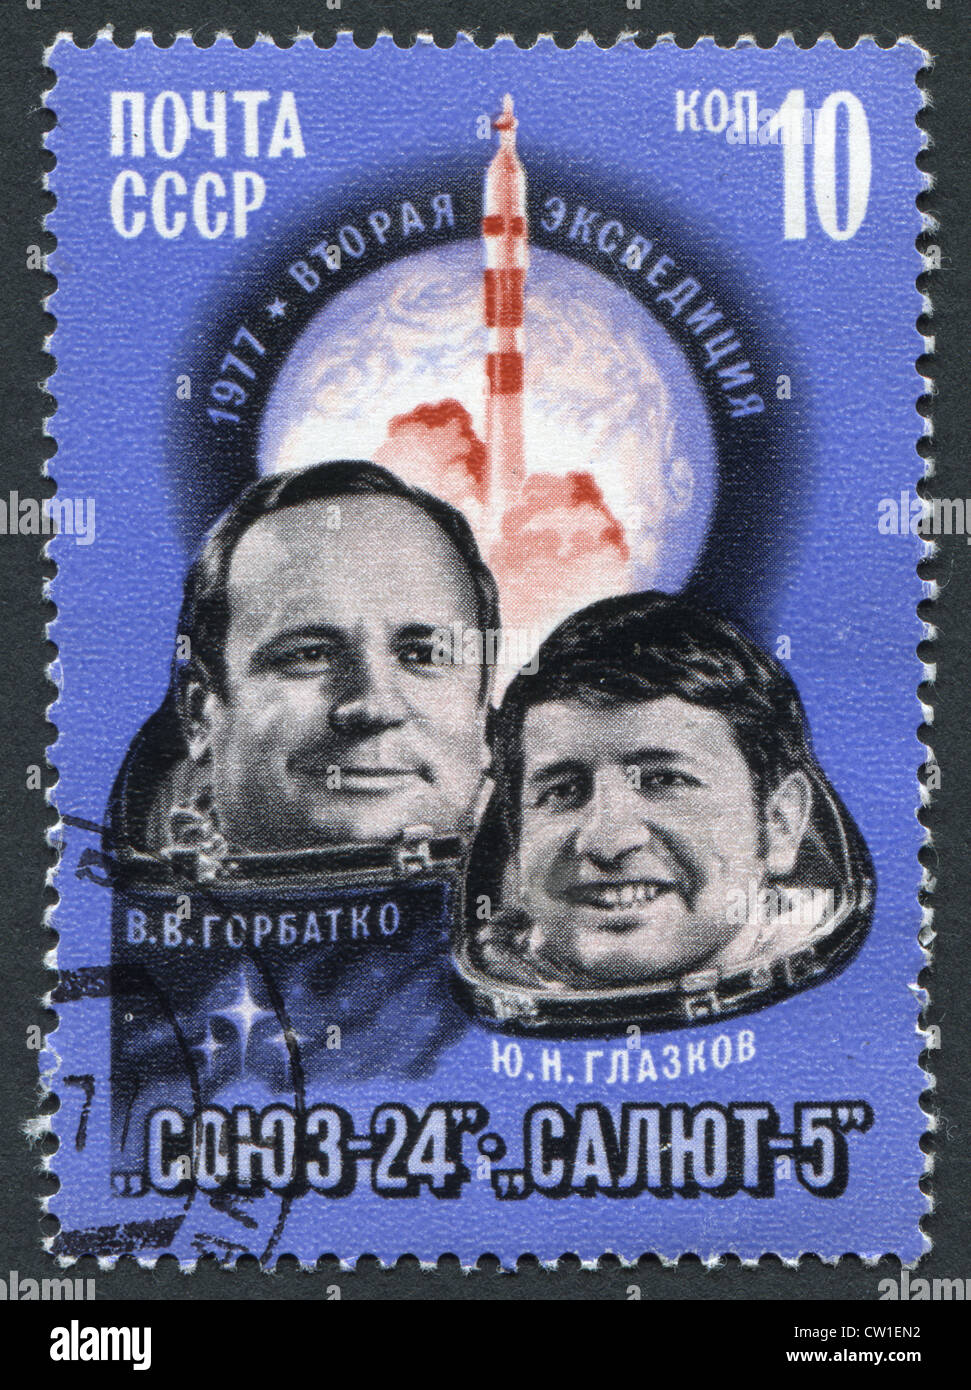 USSR - CIRCA 1977: A stamp printed in the USSR shows Soviet cosmonauts Gorbatko and Glazkov, circa 1977 Stock Photo